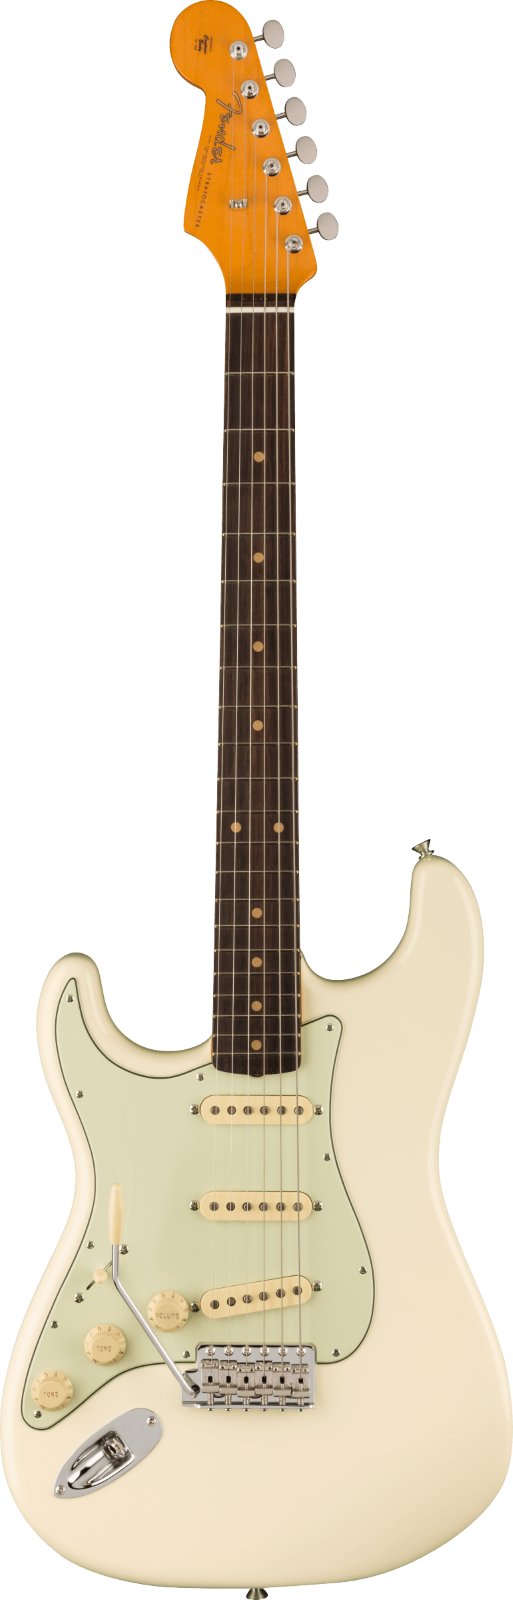 Fender American Vintage II 1961 Stratocaster Left-Hand, Palisandergriffbrett, Olympic White : photo 1